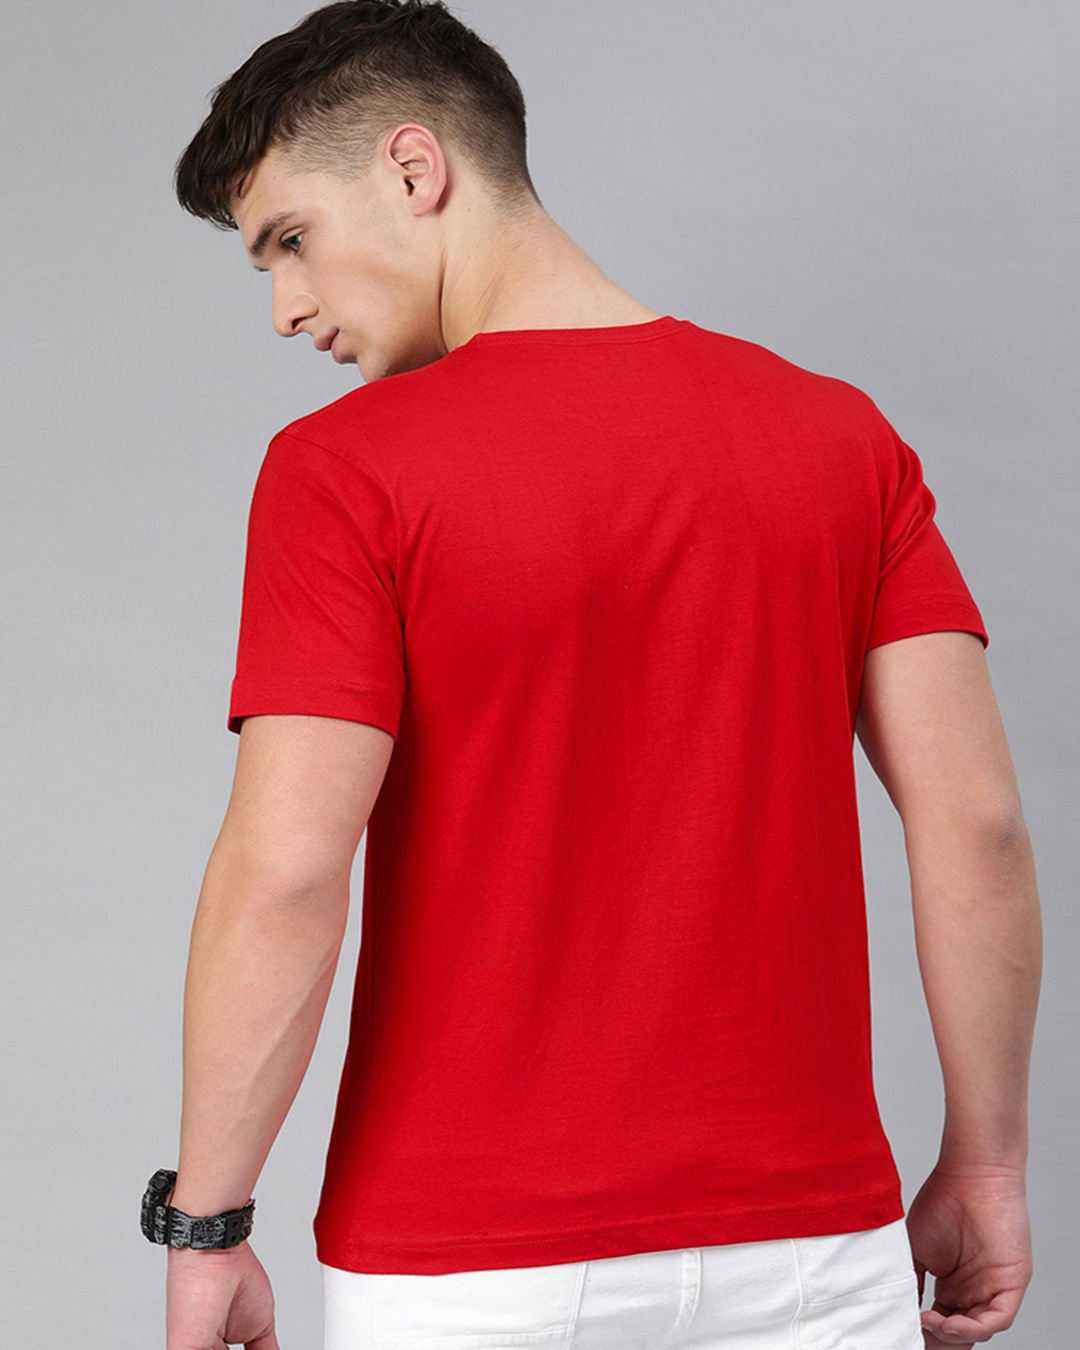 Shop Chill Mode On Half Sleeve T Shirt For Men-Back